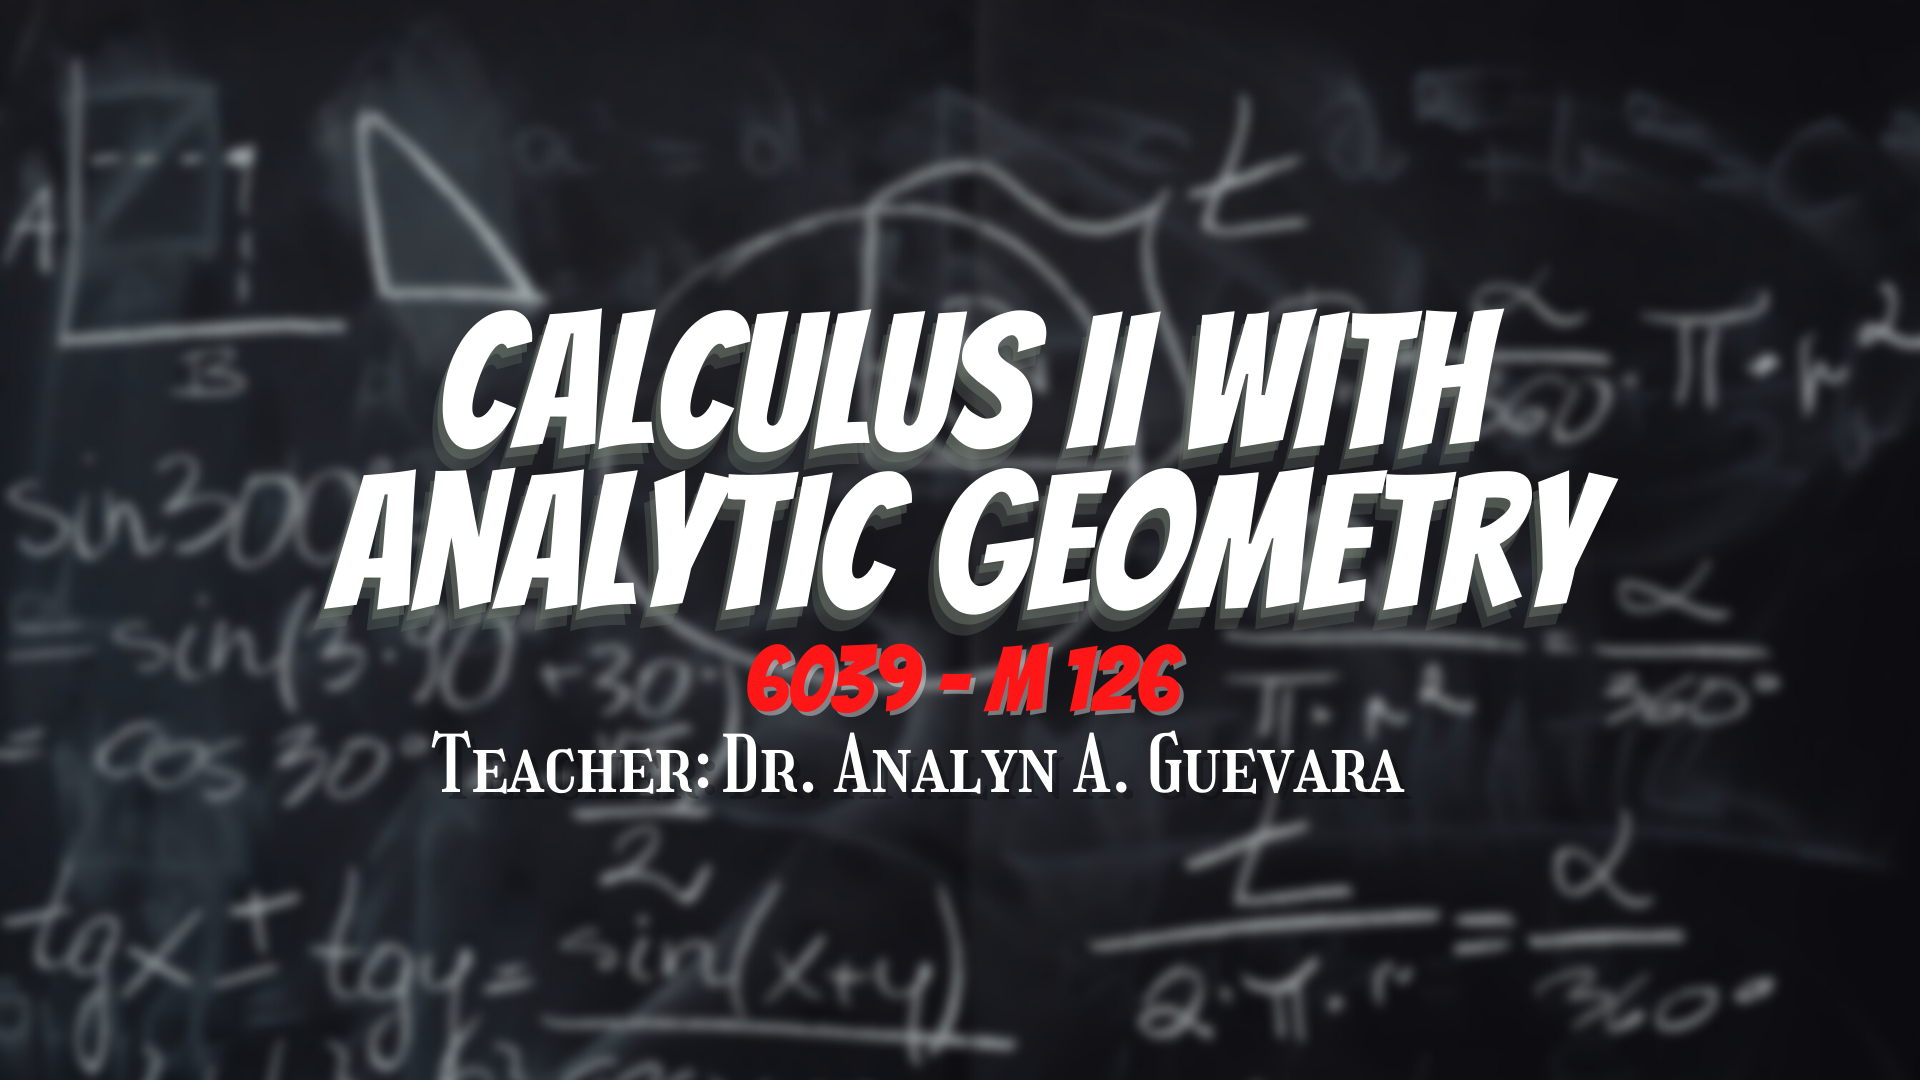 Calculus II with Analytic Geometry